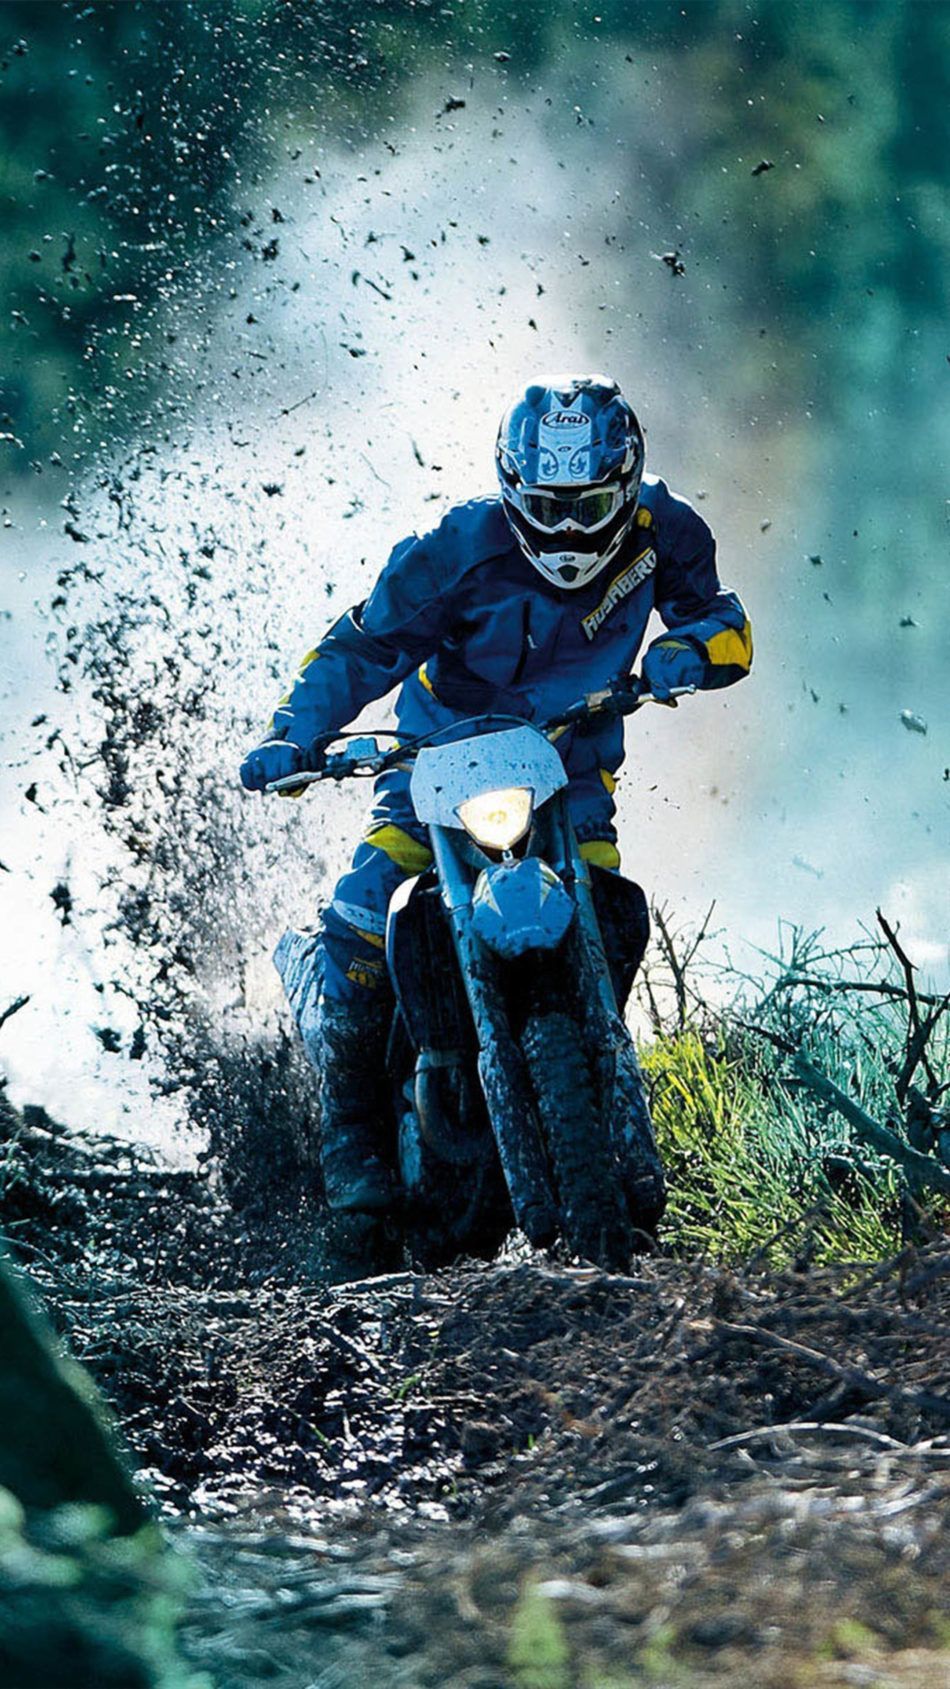 Drift Dirt Bike Race 4K Ultra HD Mobile Wallpaper. Racing bikes, Dirt bike racing, Motocross racing